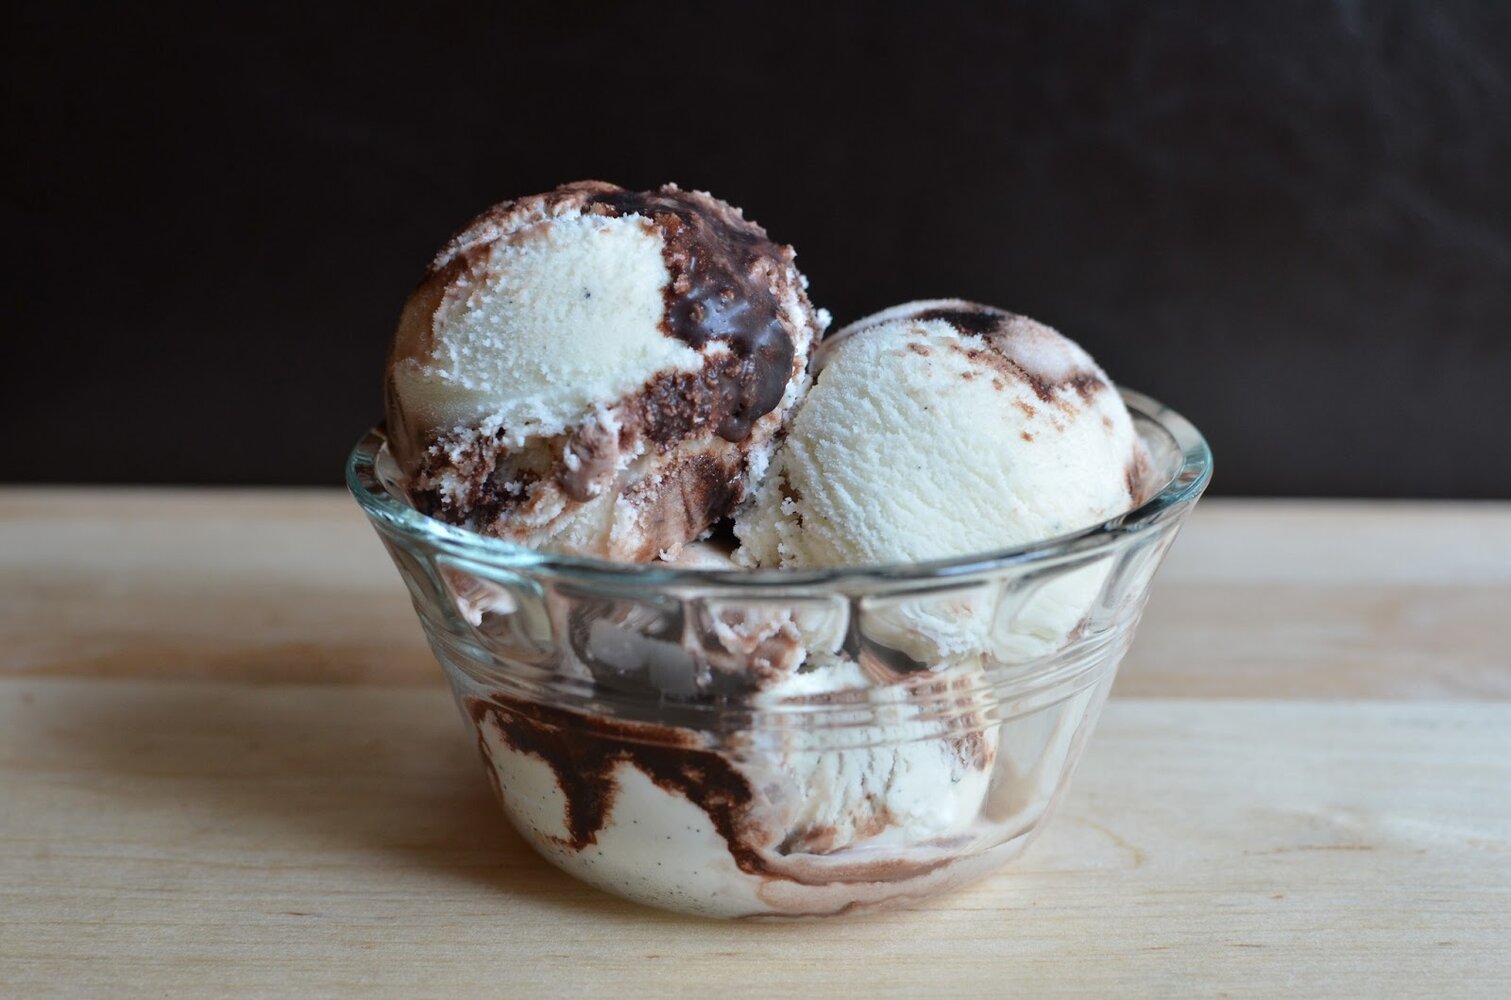 fudge ripple ice cream (5).JPG